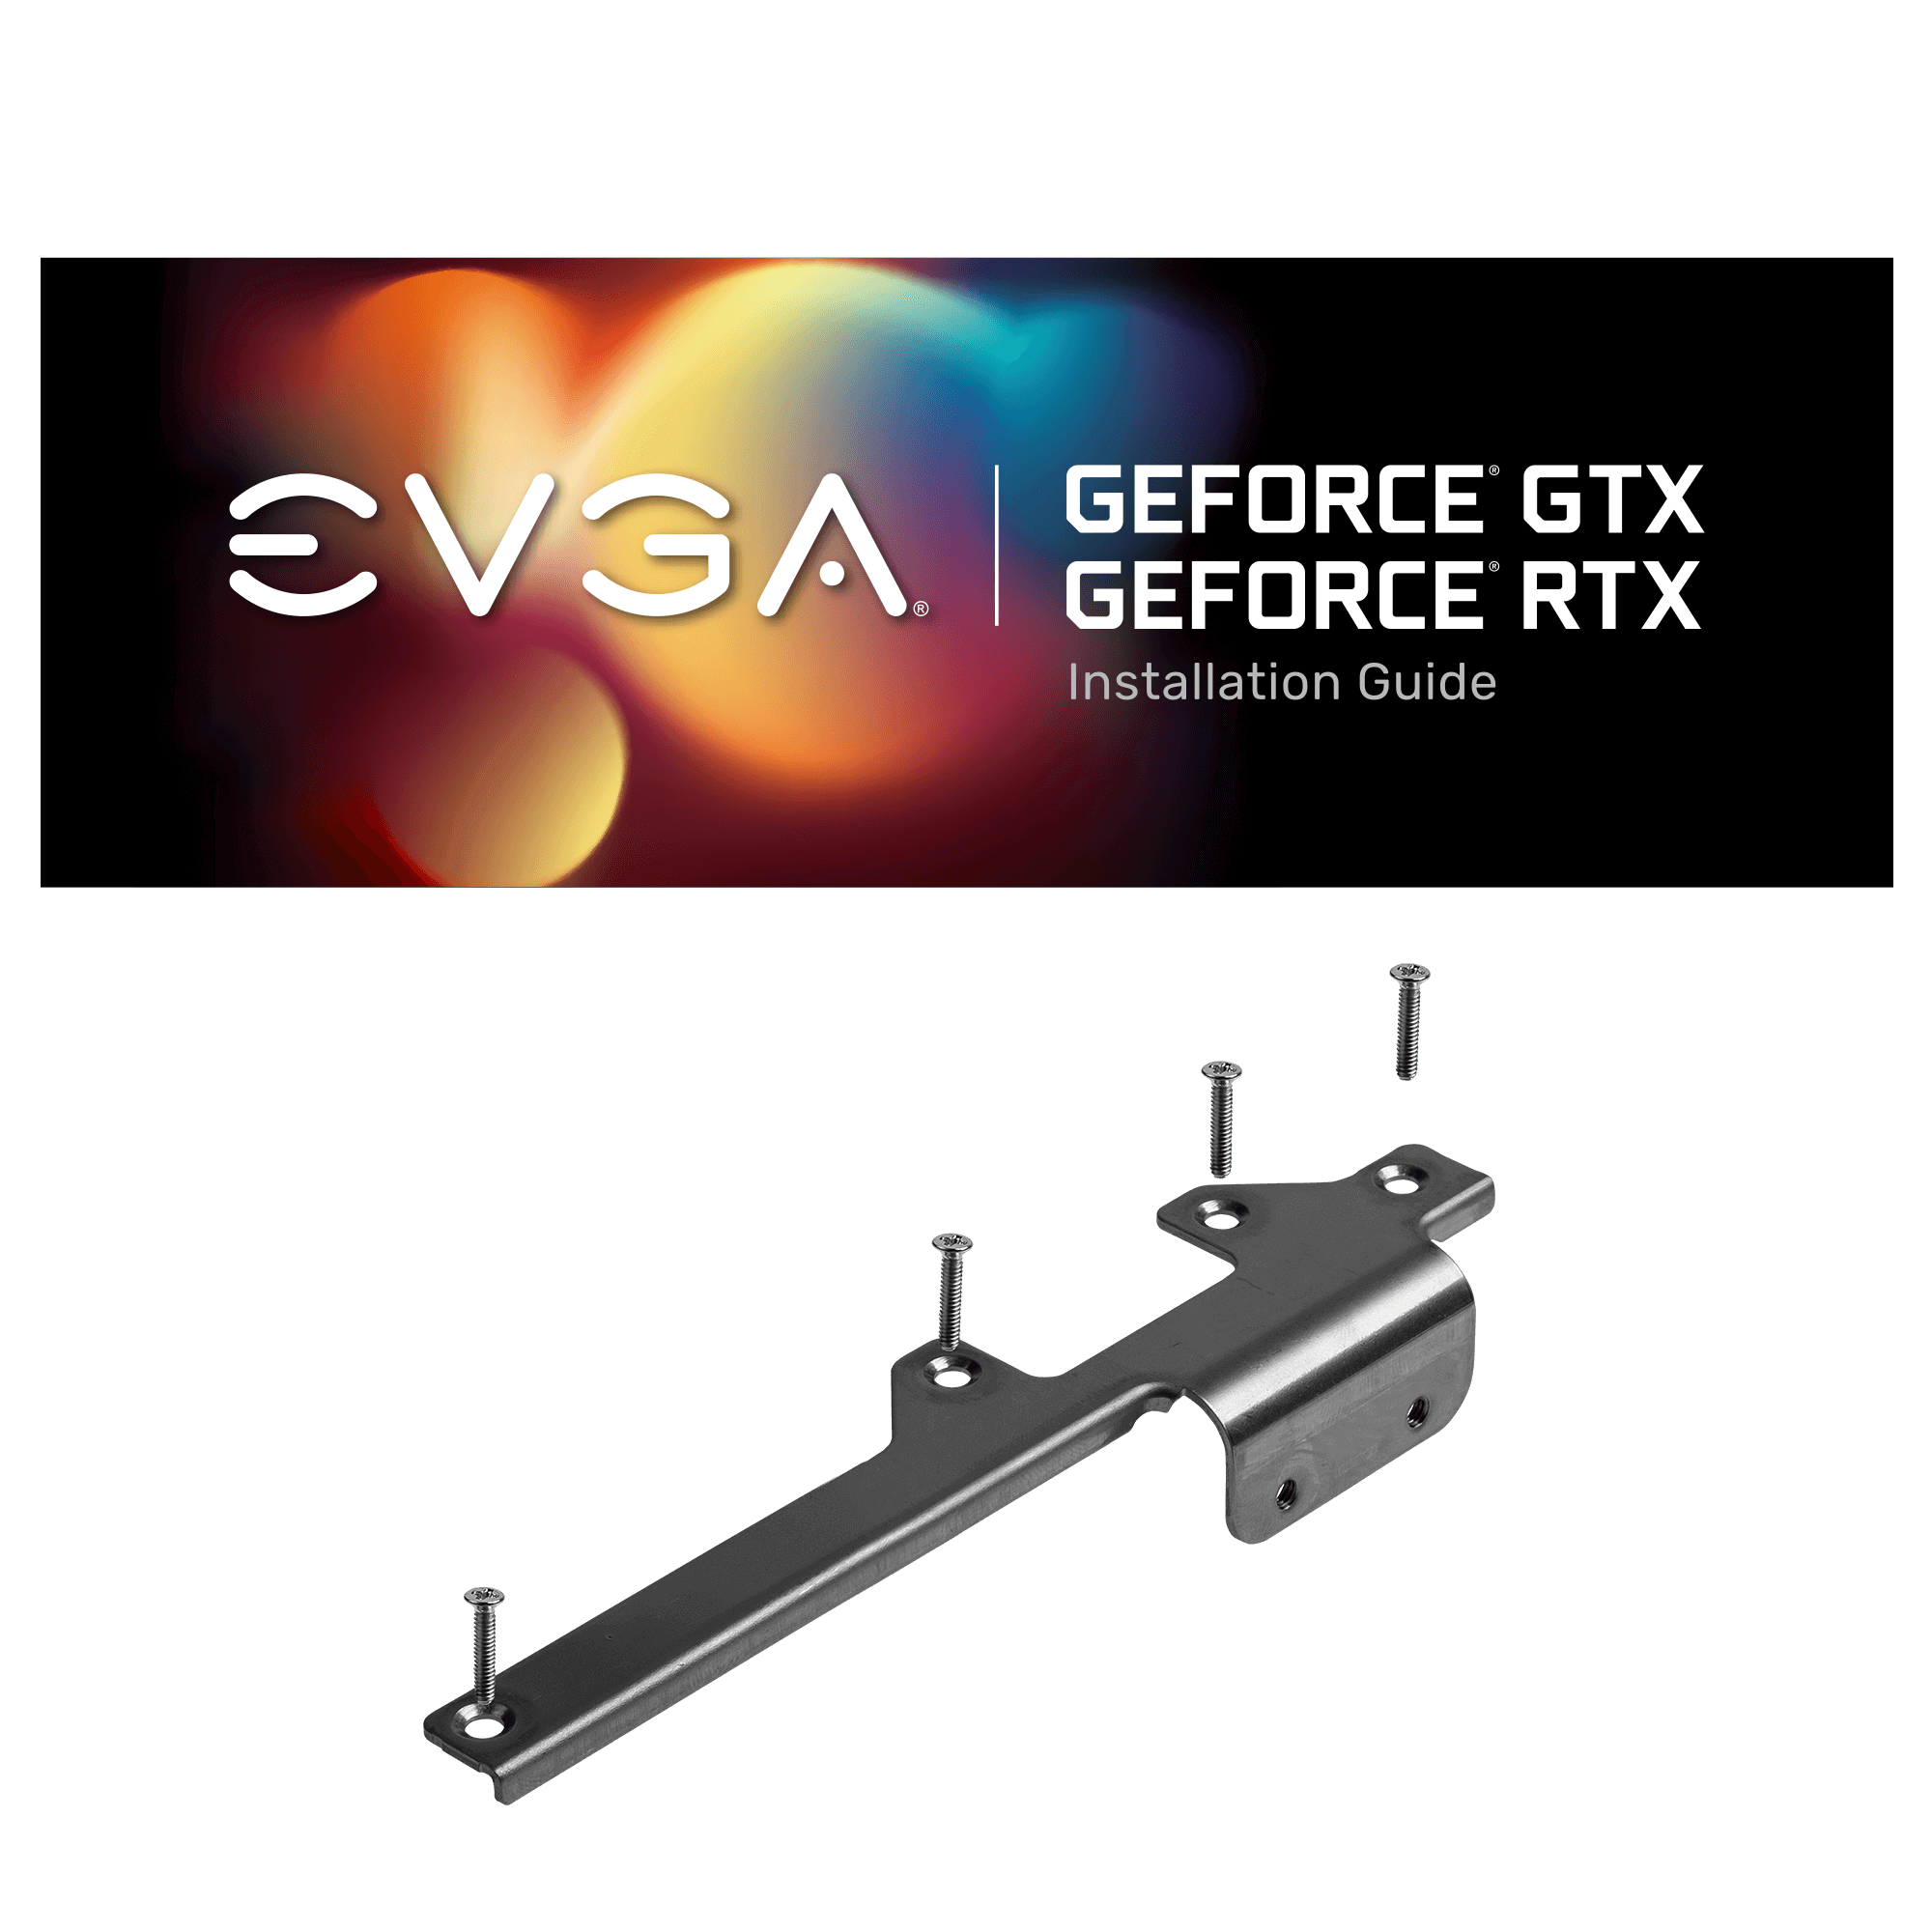 EVGA GEFORCE RTX 3080 FTW3 ULTRA GAMING 12GB GDDR6X GRAPHIC CARD